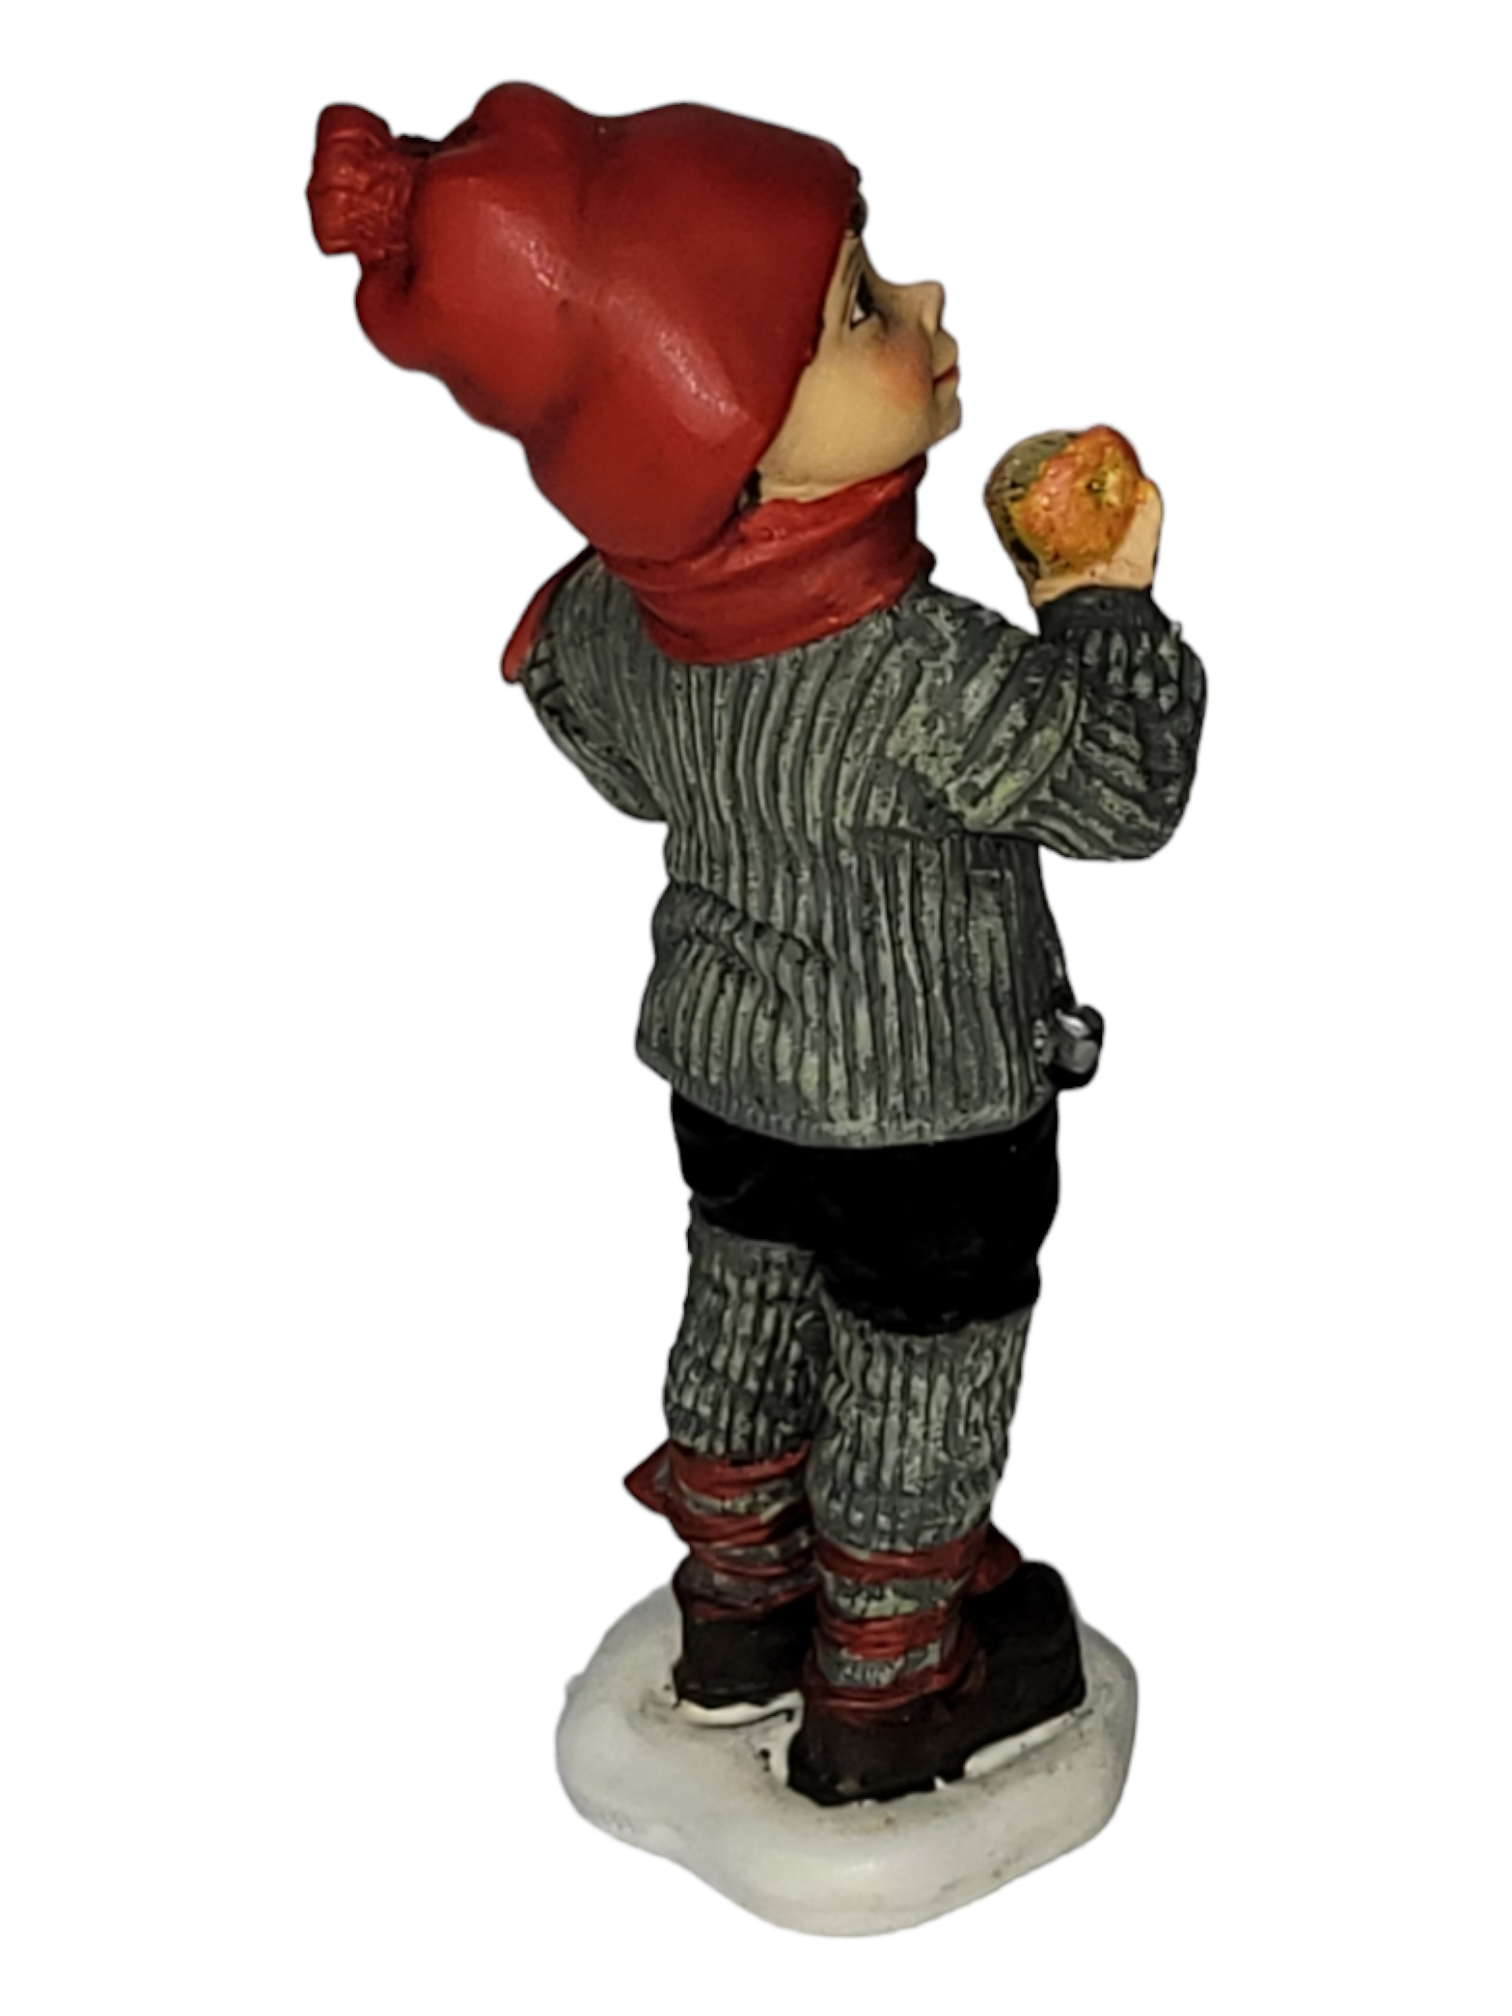 Figurine: Apple Boy